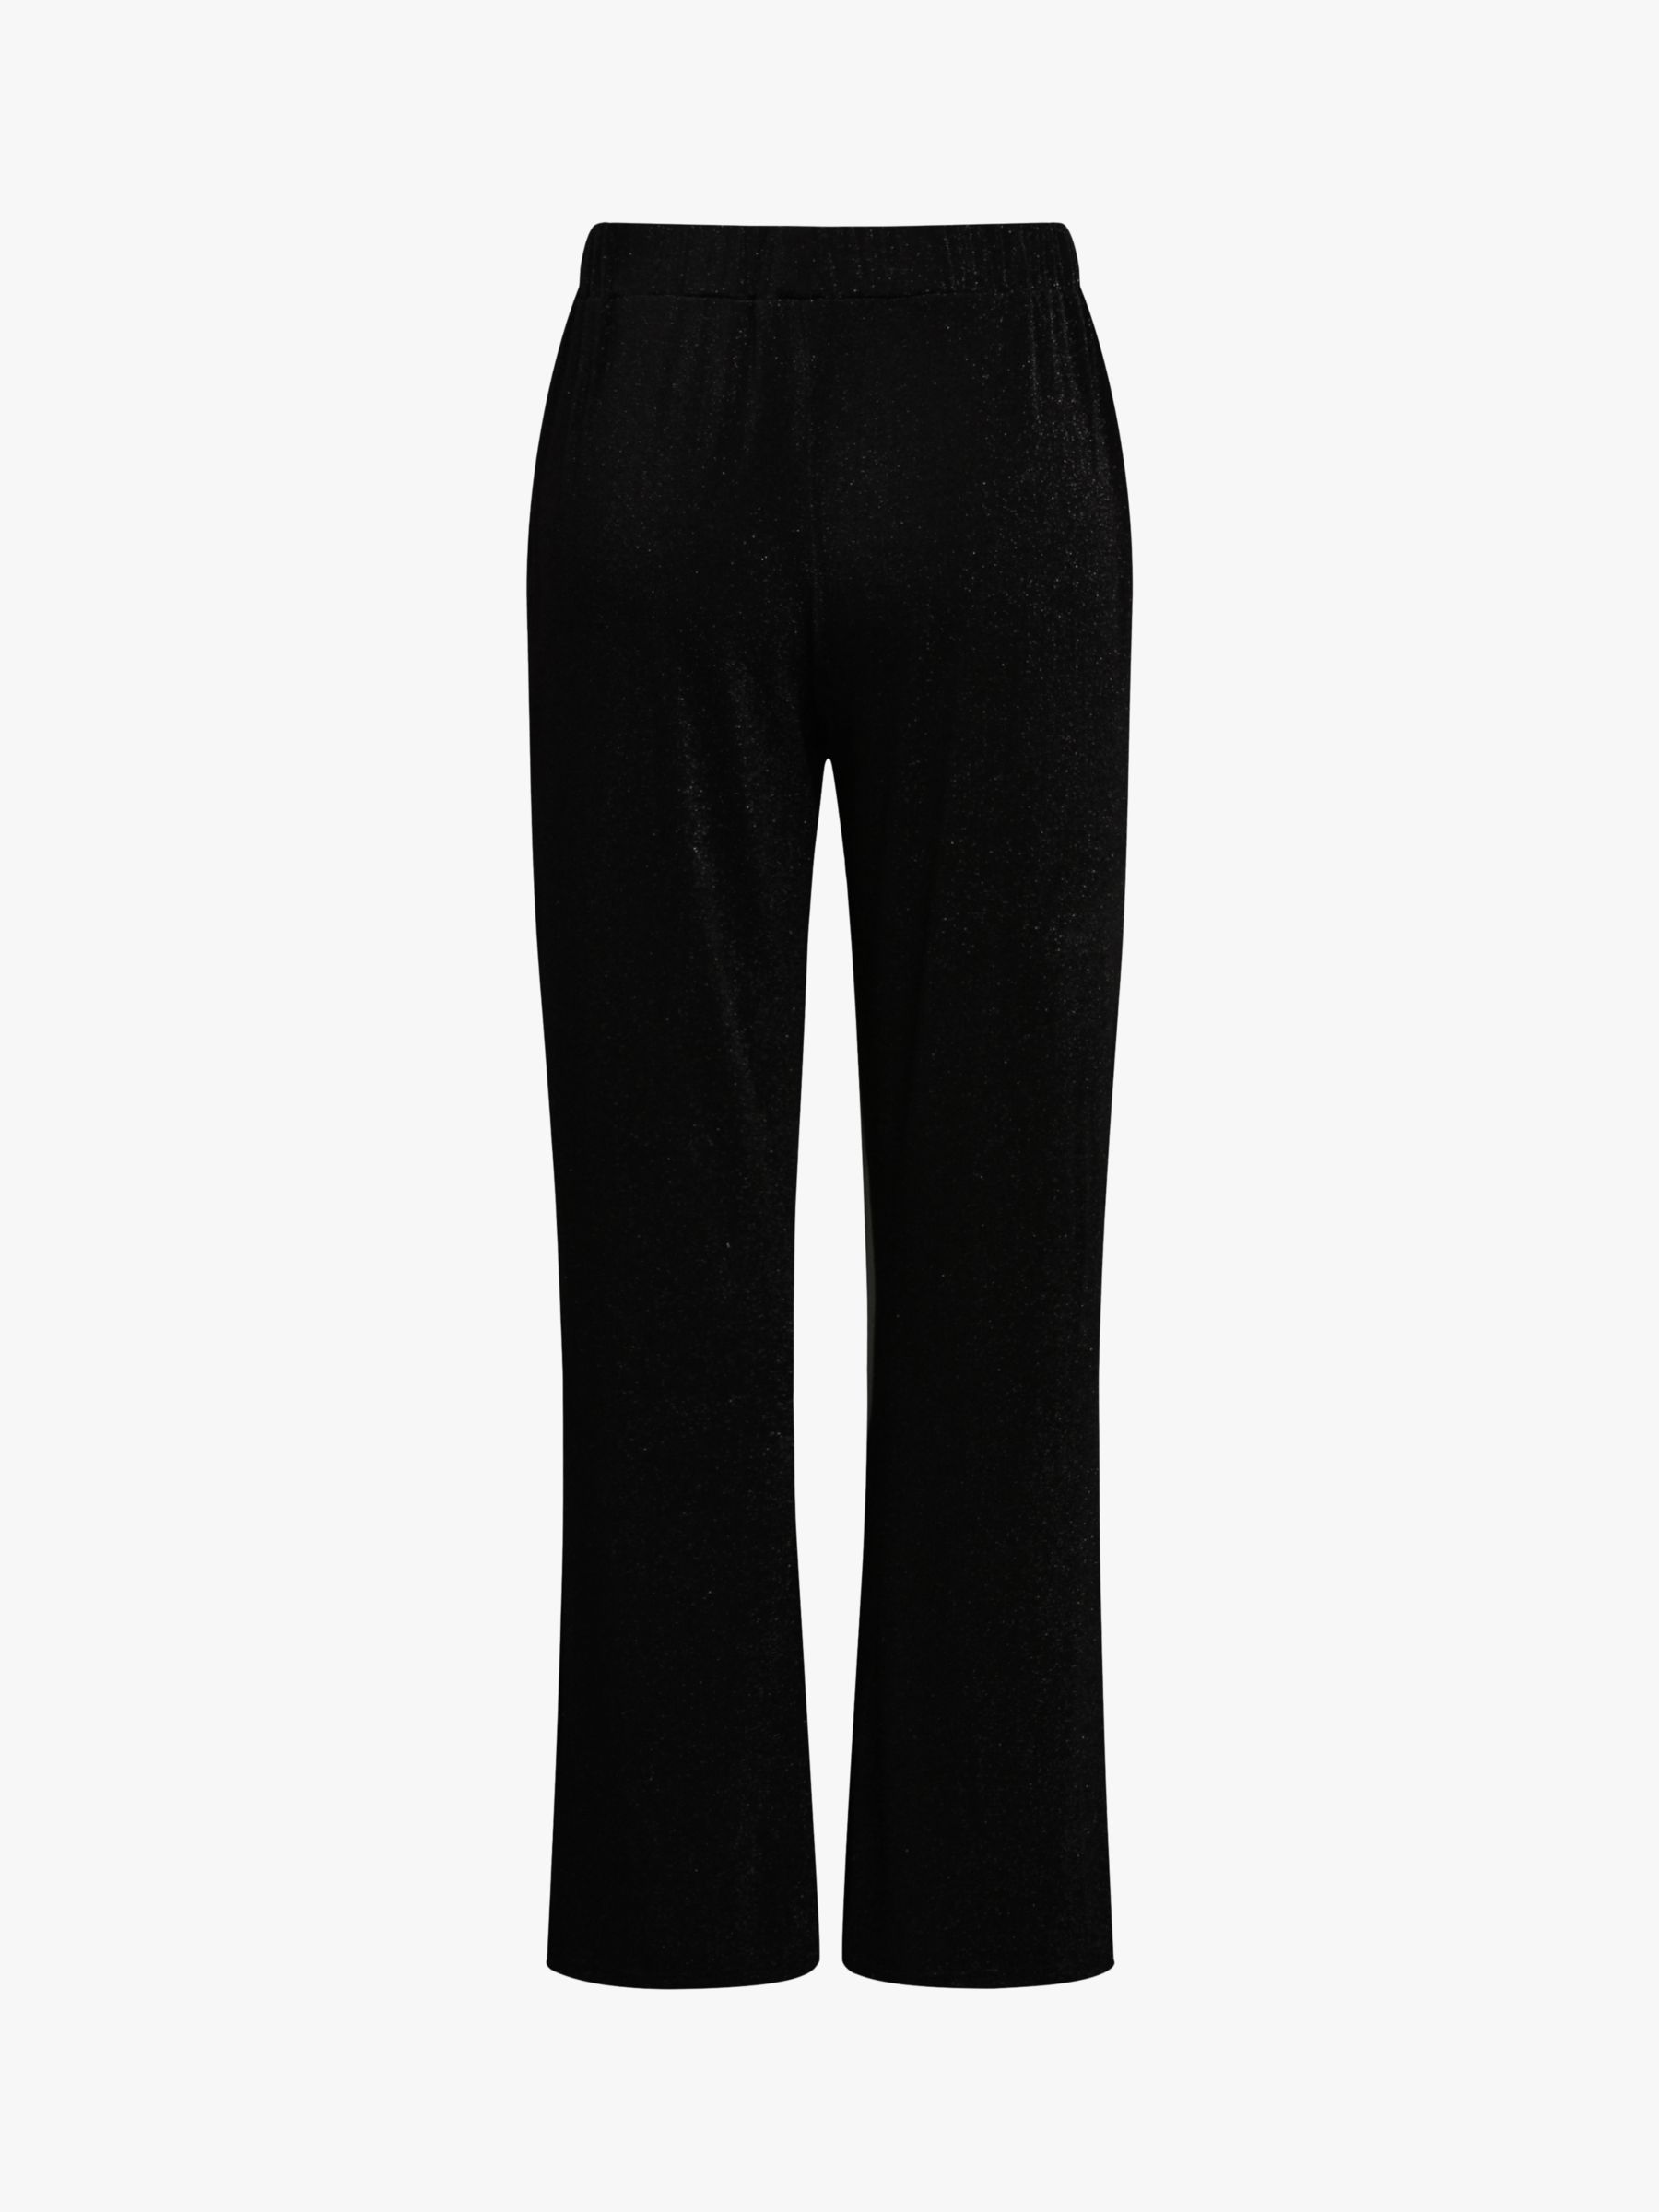 A-VIEW Eva Loose Trousers, Black at John Lewis & Partners